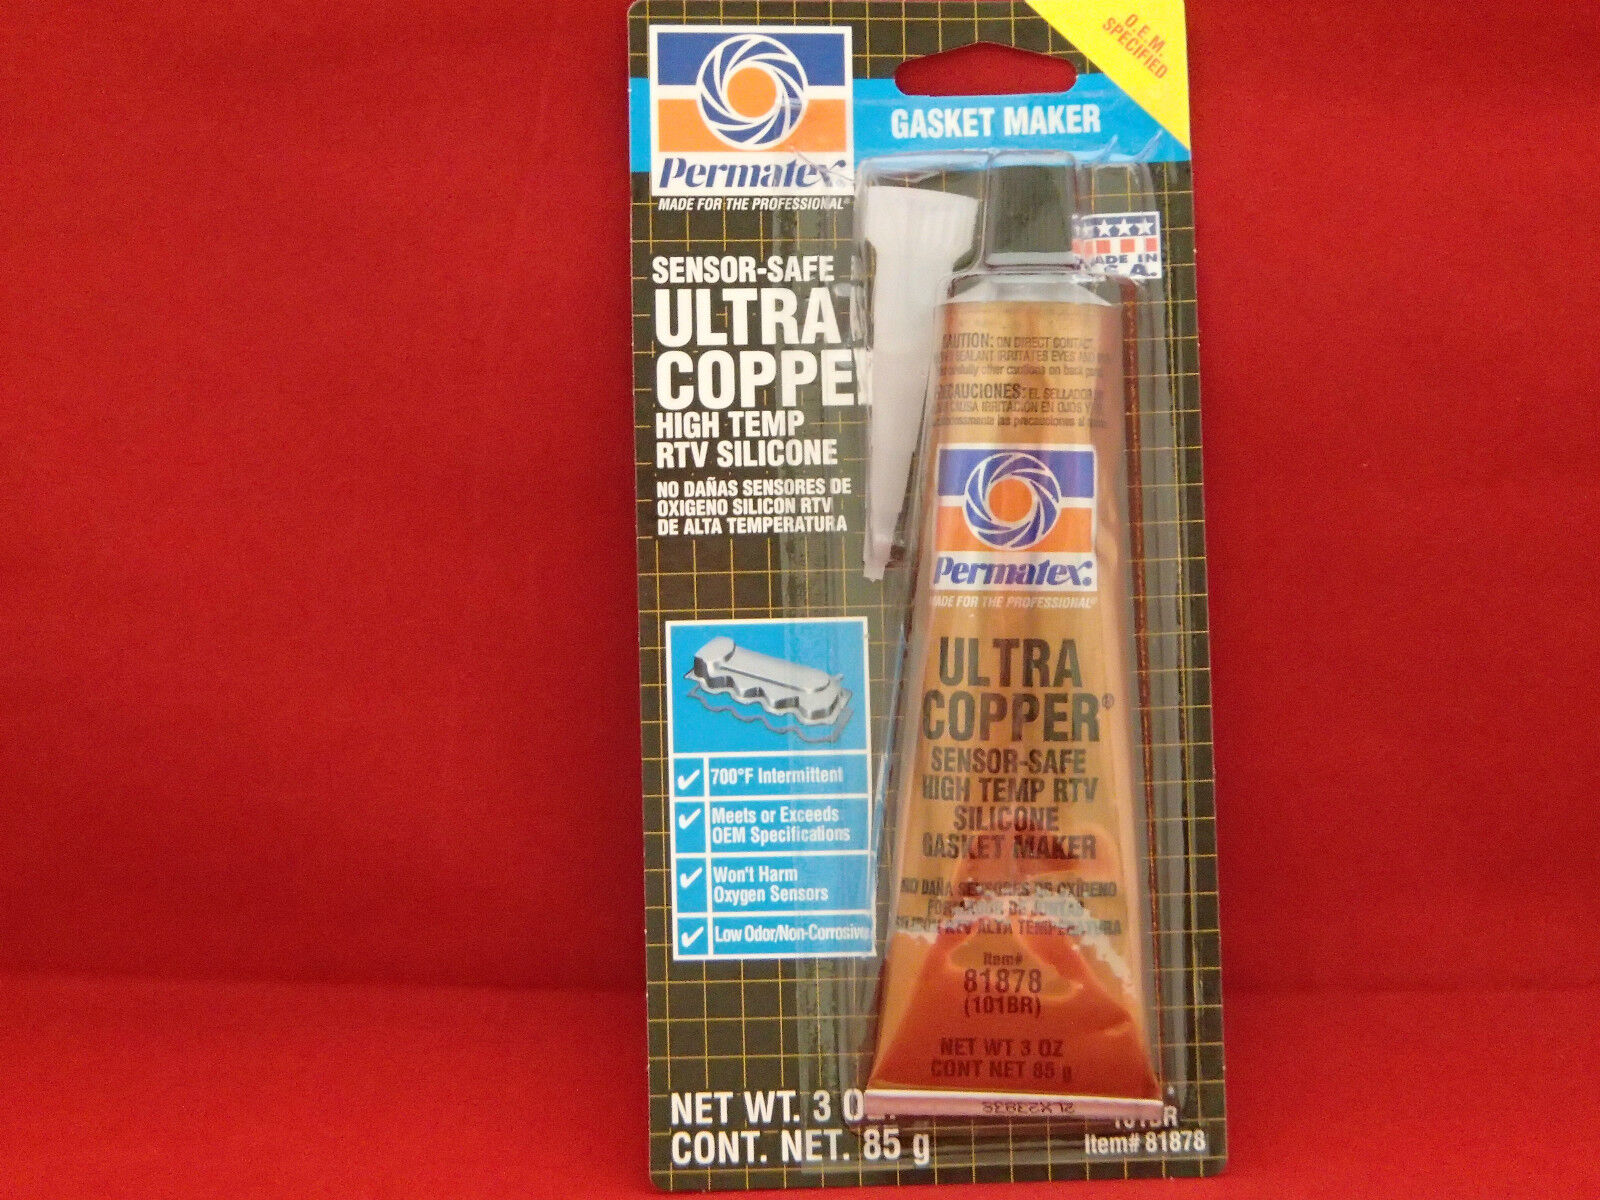   Permatex 81878 Ultra Copper Maximum HIGH Temperature RTV Silicone Gasket Maker